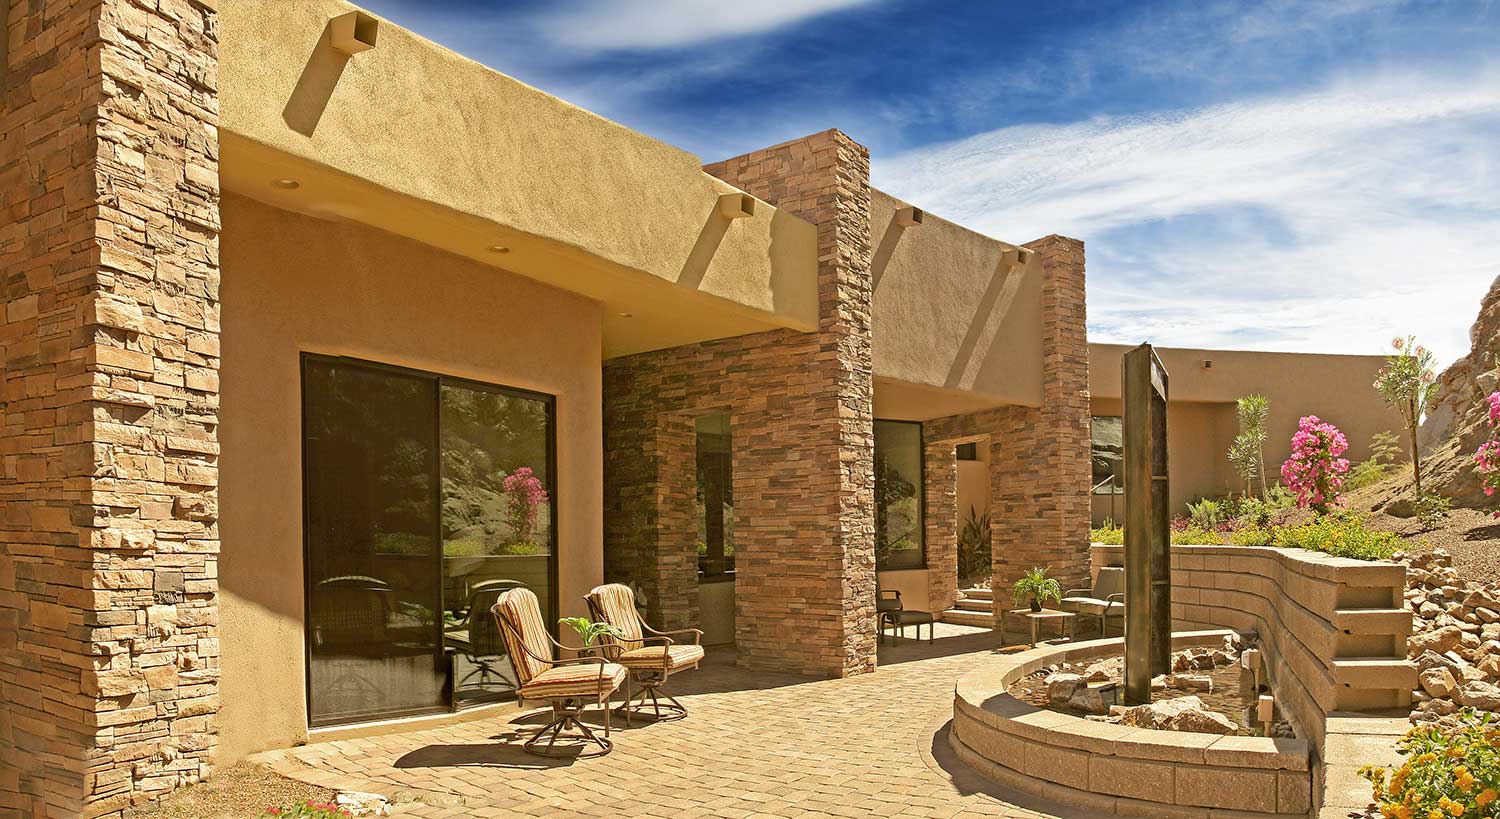 The beautiful backyard of a luxury home in Tucson, AZ